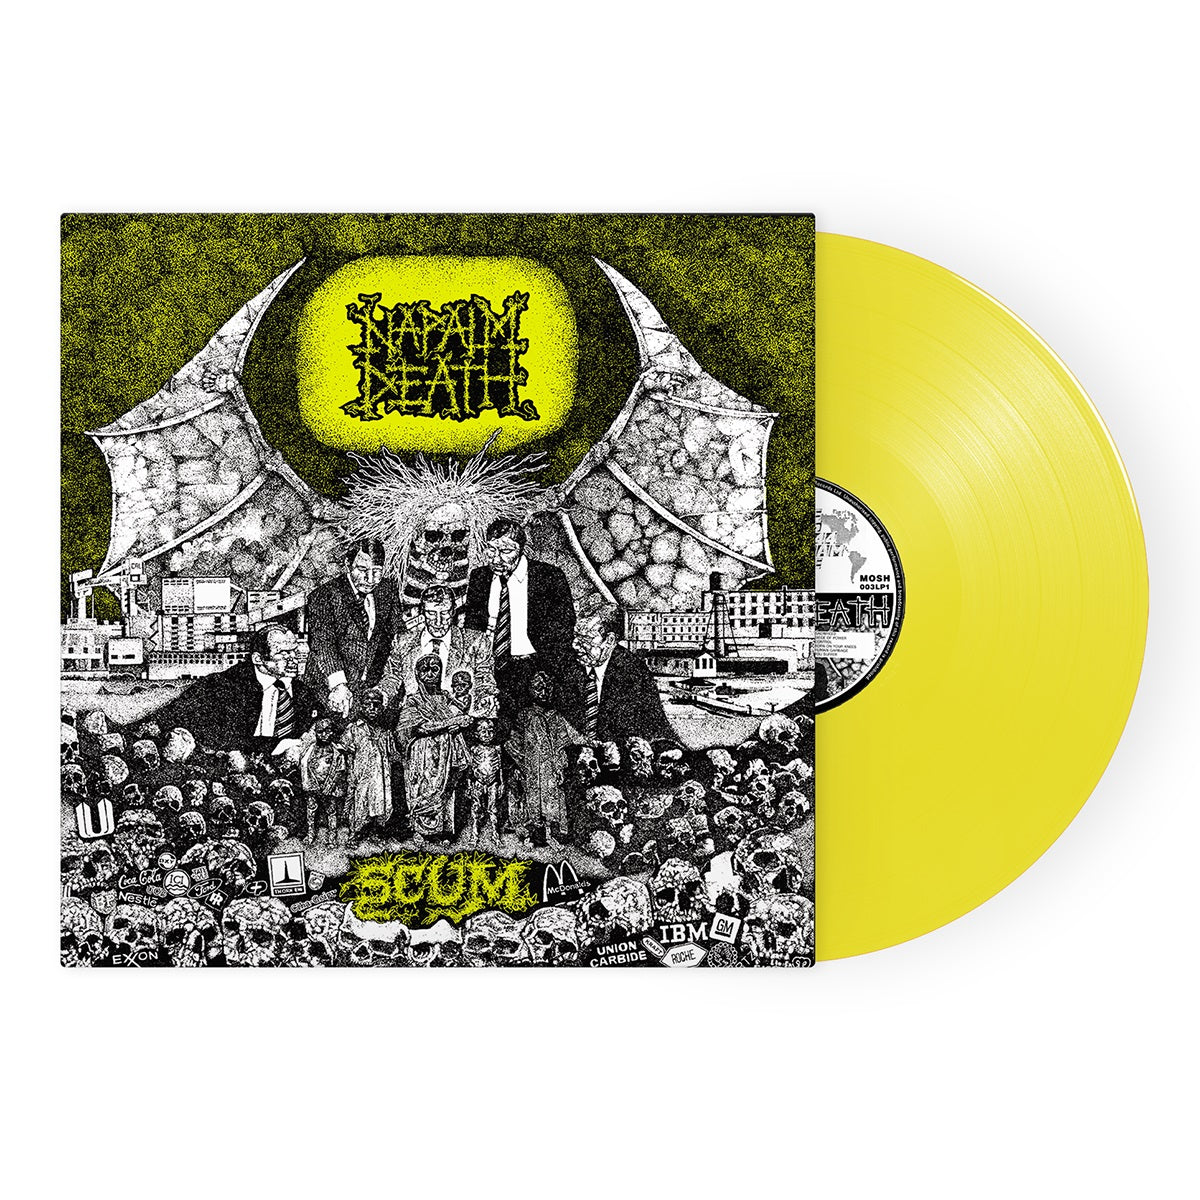 Napalm Death "Scum" FDR Yellow Vinyl